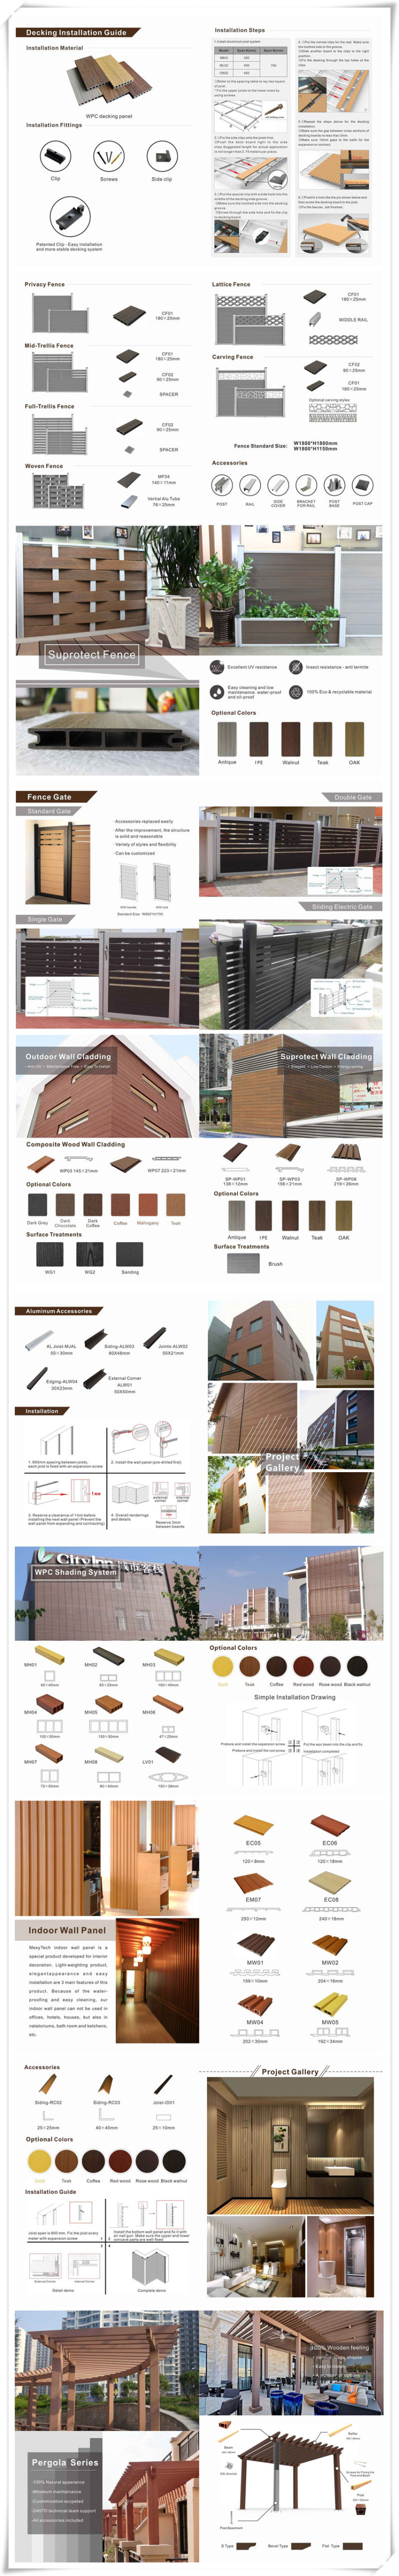 Outdoor Anti-Crack WPC DIY Interlocking Composite Deck Tiles